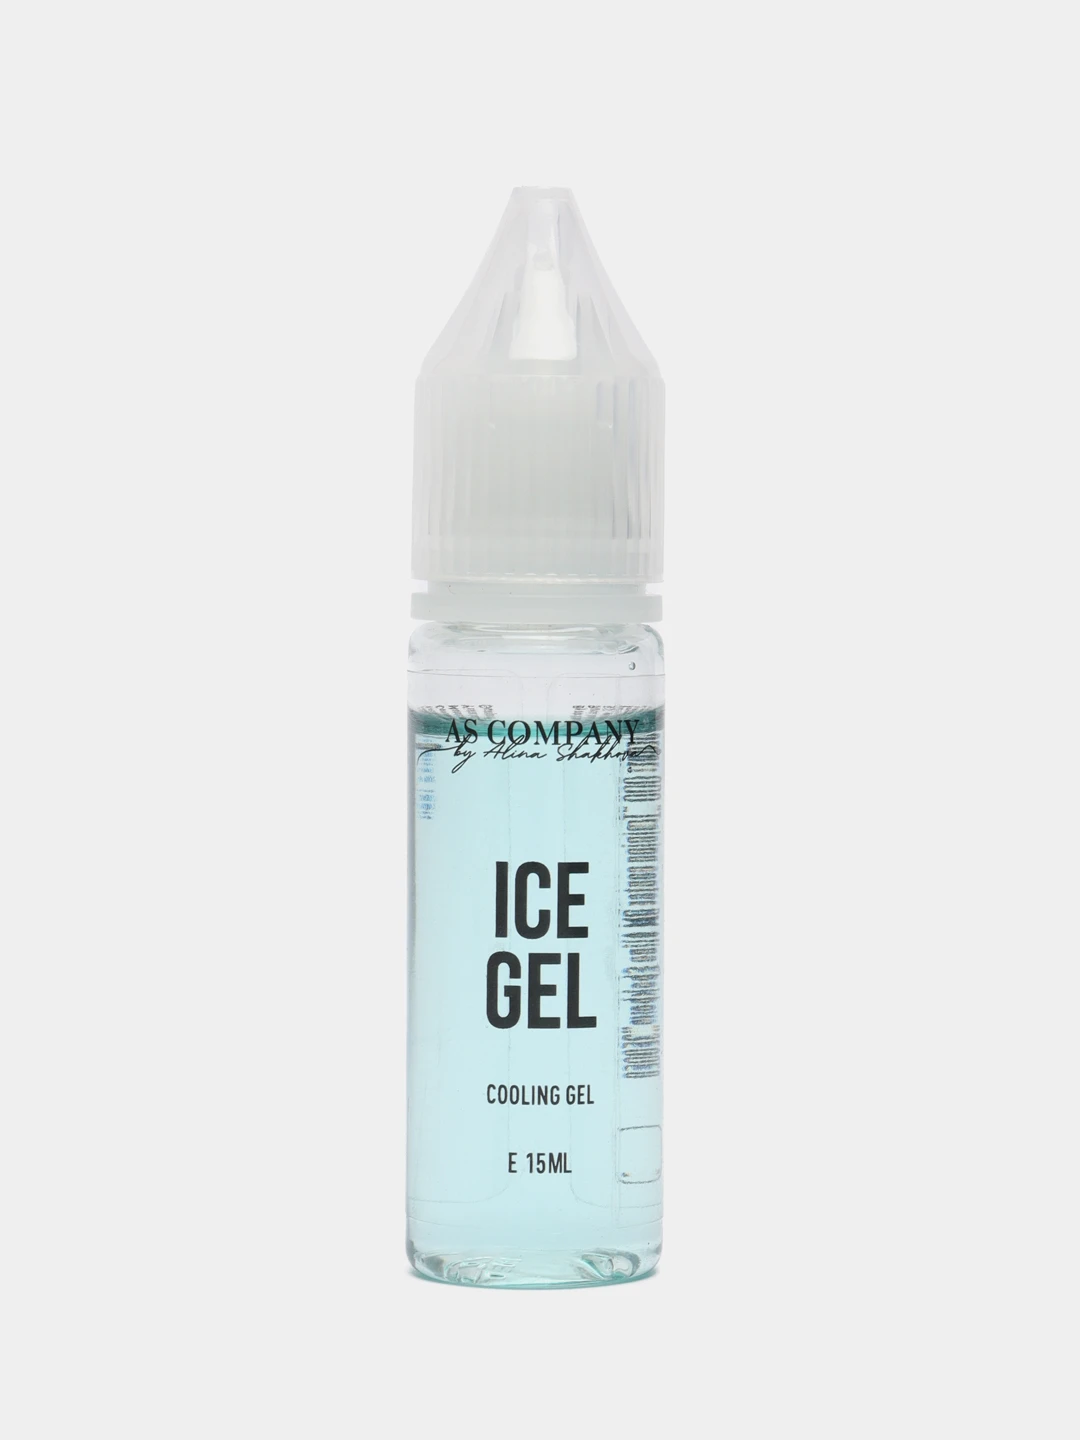 Ice gel. Охлаждающий гель. Гель Ice. Комбалгин айс гель. Вазелин Menthol 150 мл as-Company™.